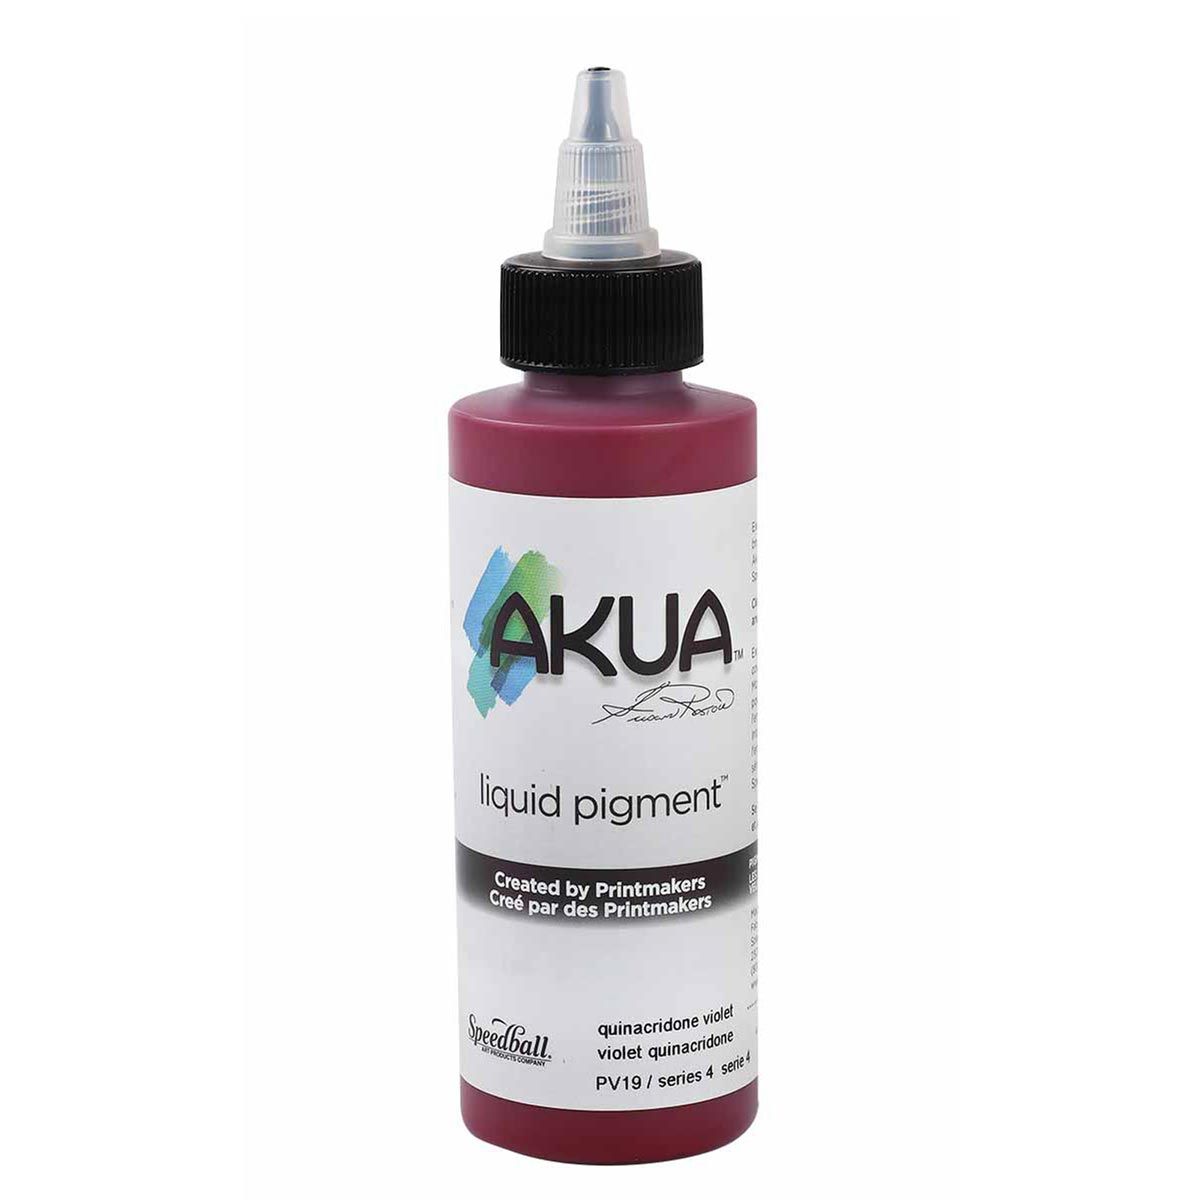 Akua Liquid Pigment - Quinacridone Violet 118ml (4oz)